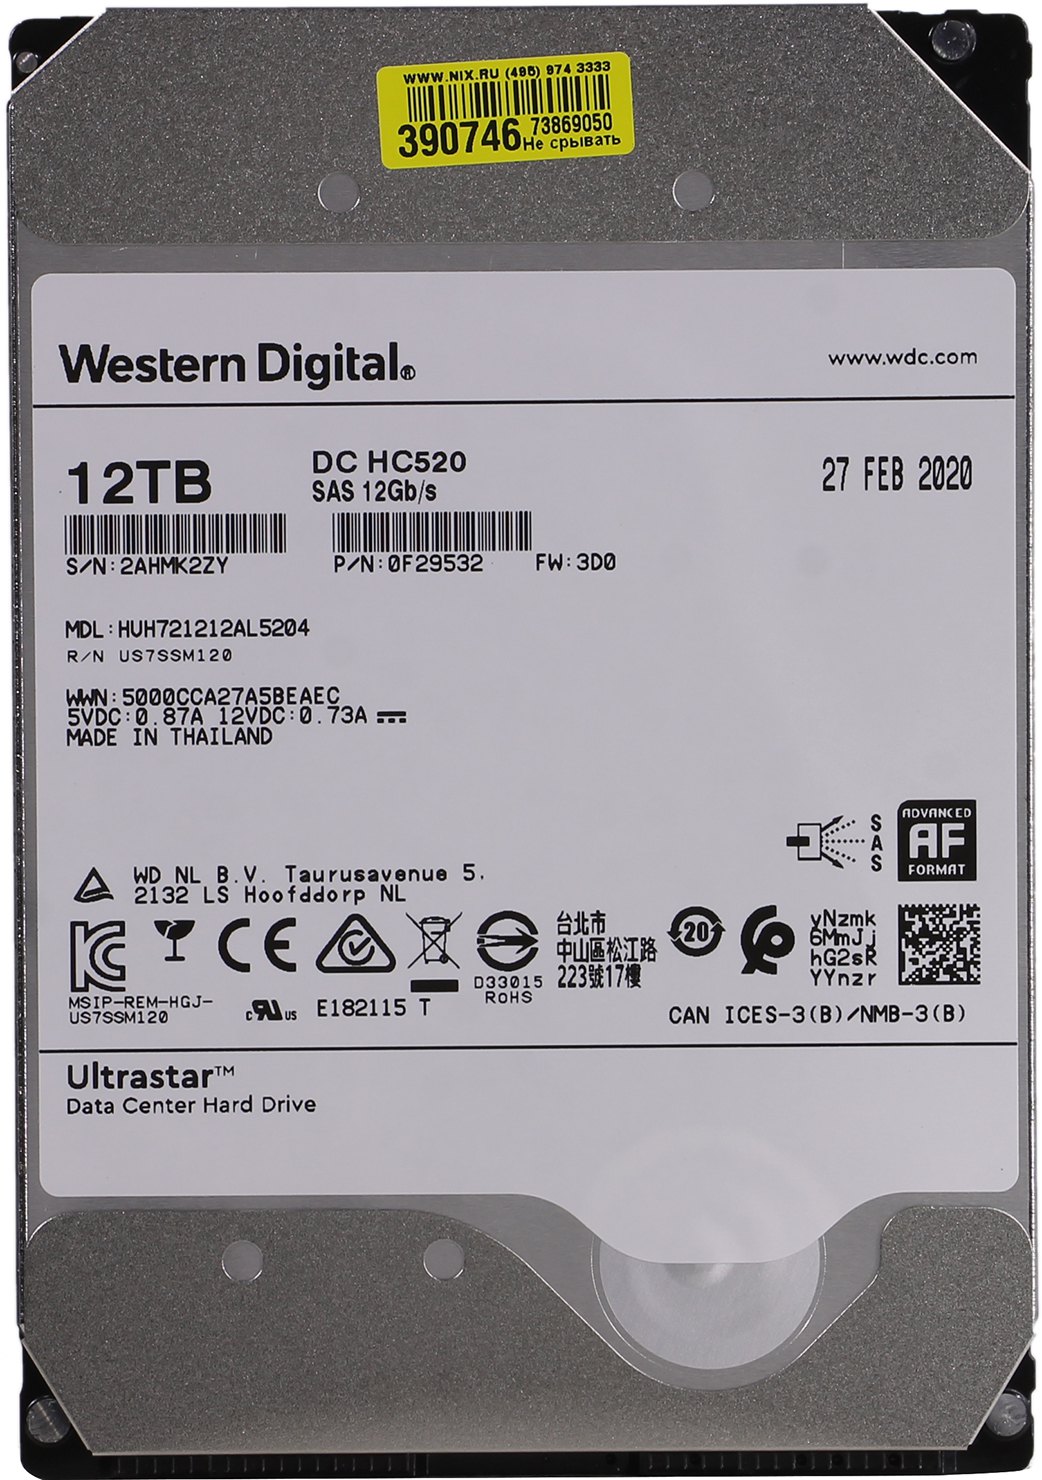 Жесткий диск Western Digital 3.5" 12TB Ultrastar DC HC520 [HUH721212AL5204] SAS 12Gb/s, 7200rpm, 256MB, 0F29532, 512e, Helium, Bulk